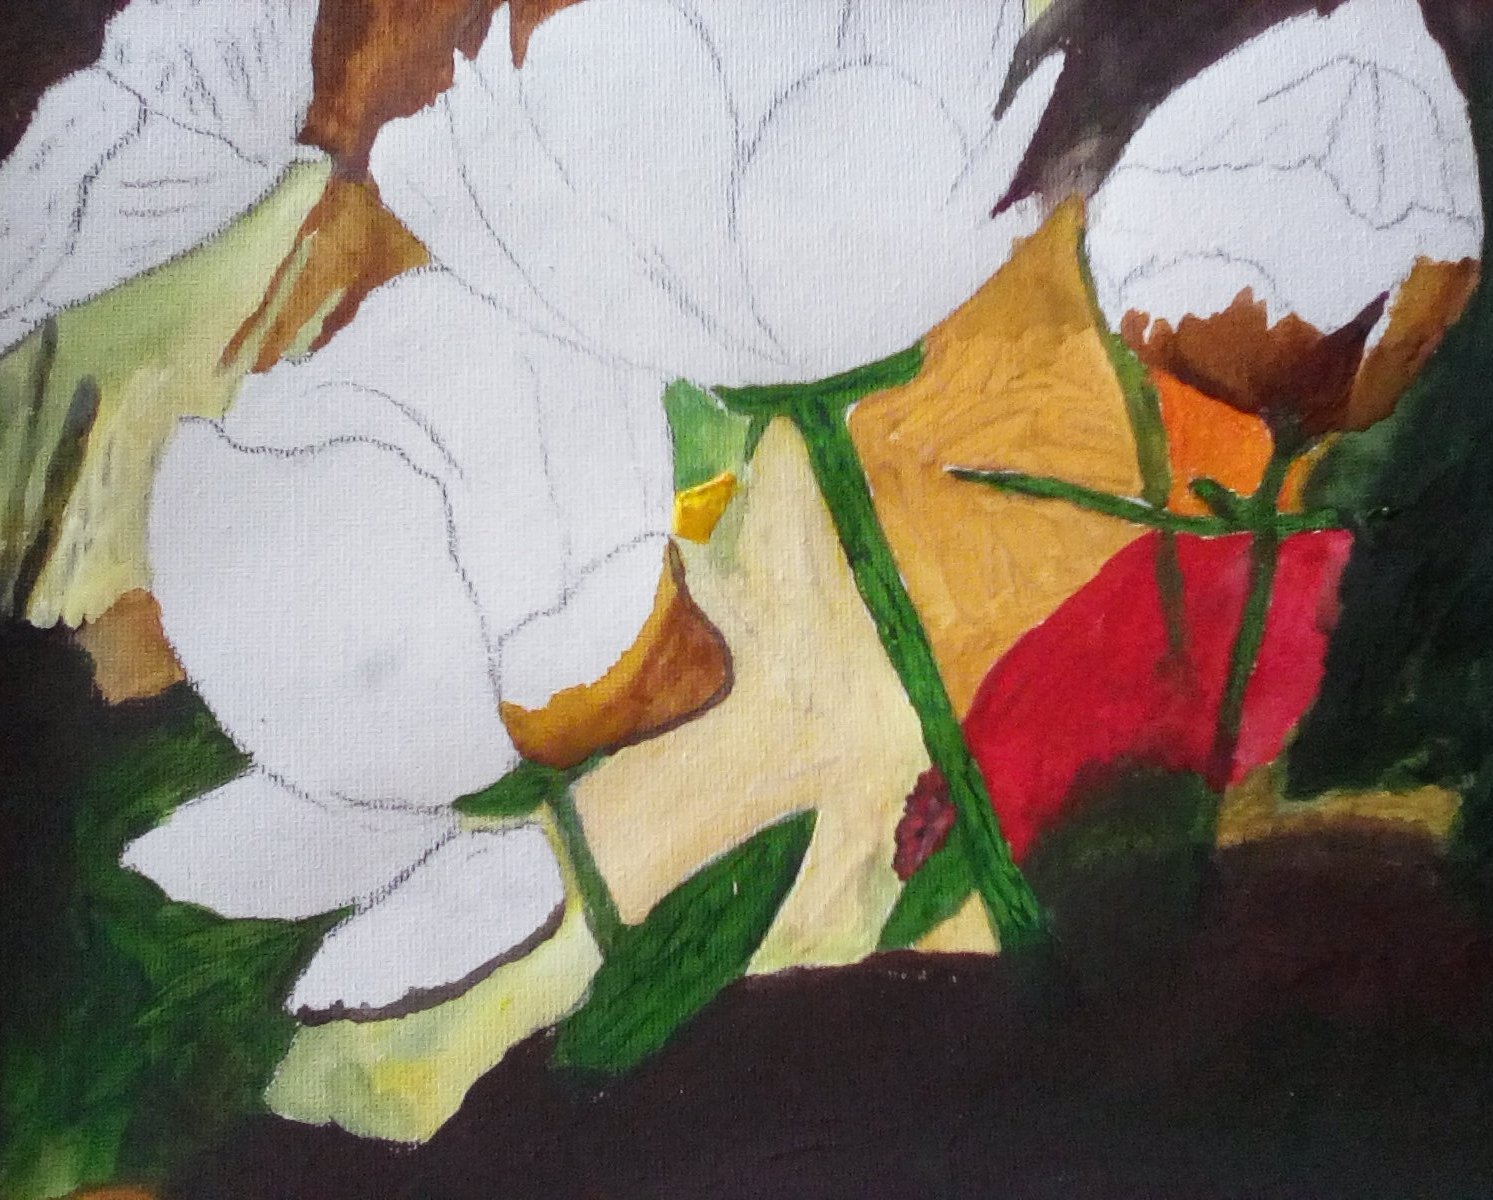 Flower painting - Work in progress.